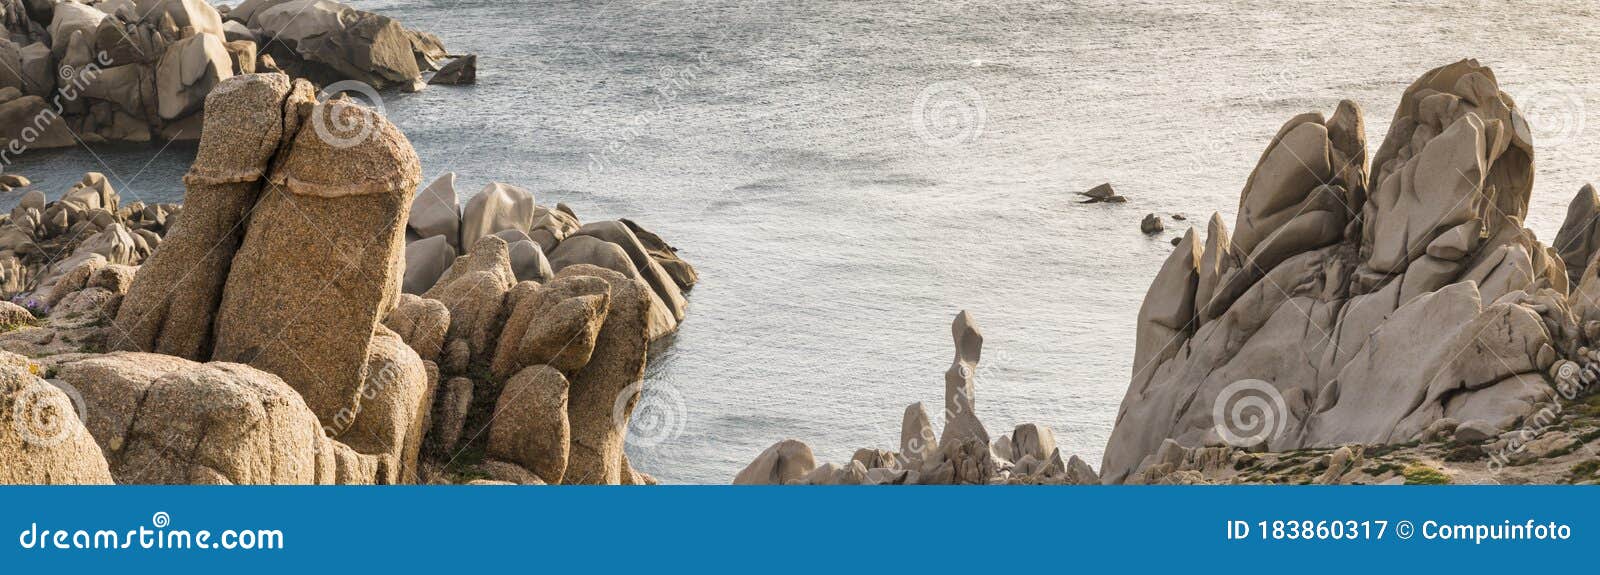 rocks and sea in palua on sardinia island